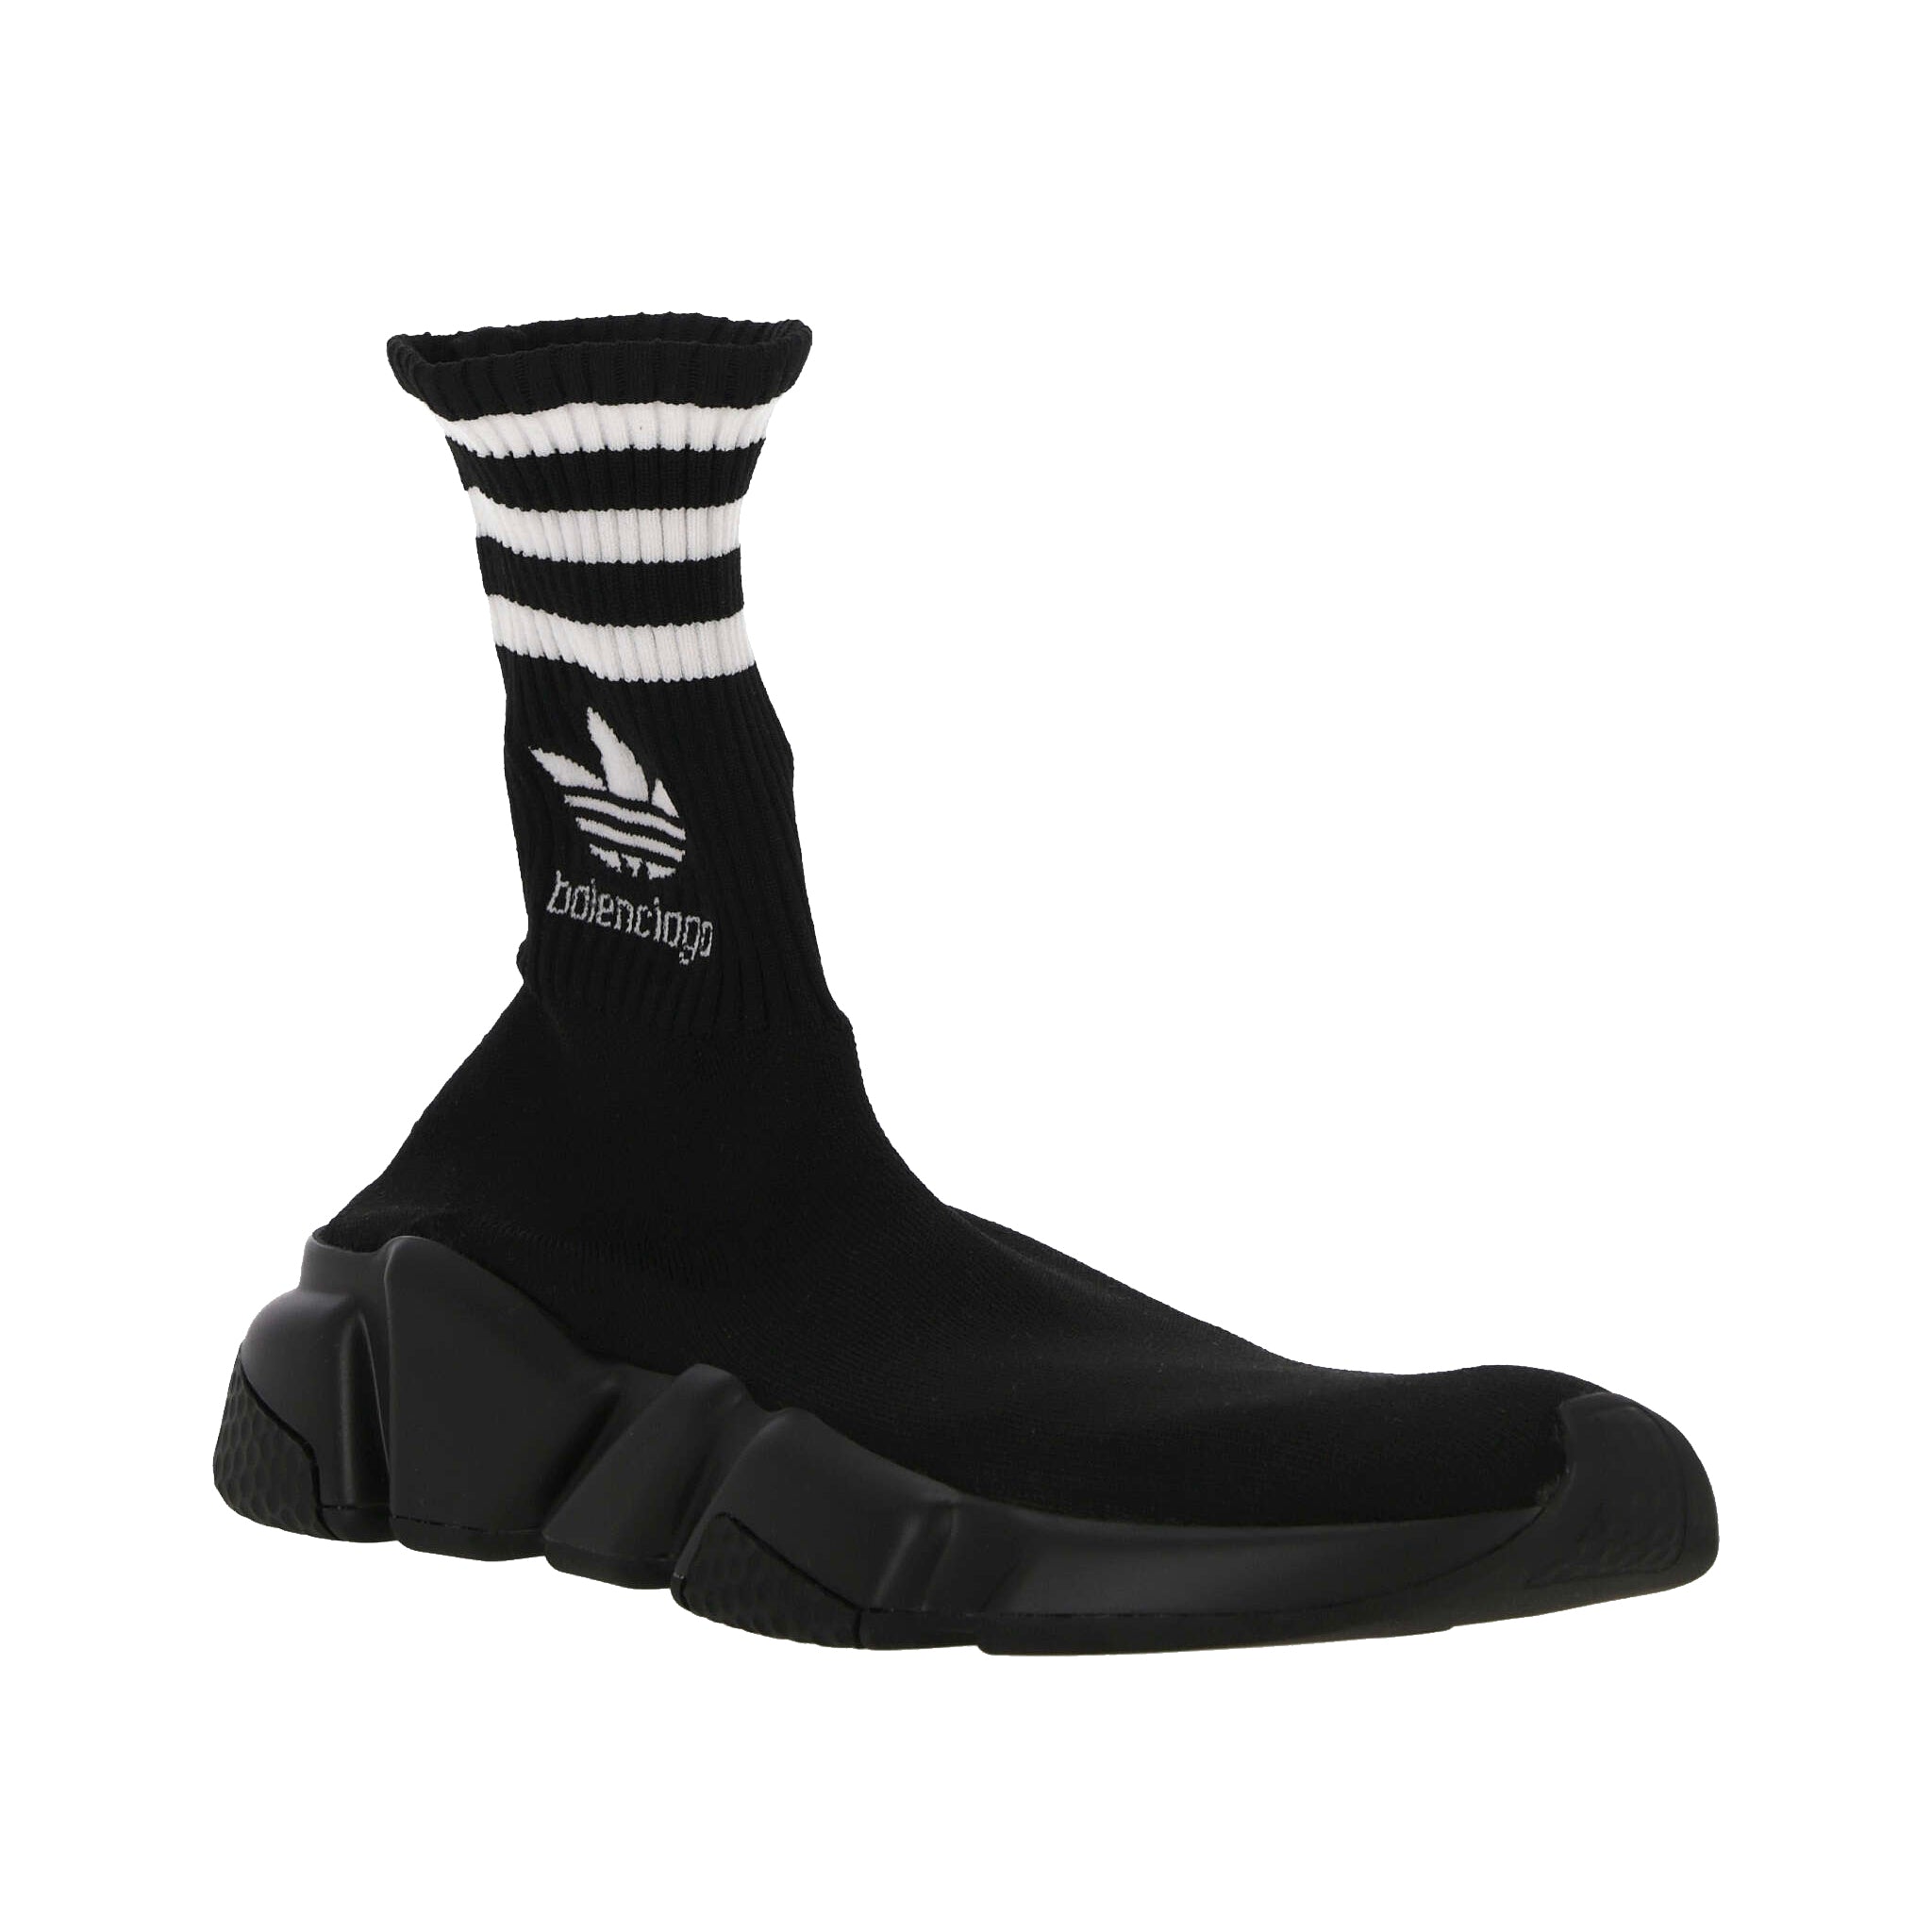 Balenciaga Speed.2 LT Sock Sneakers